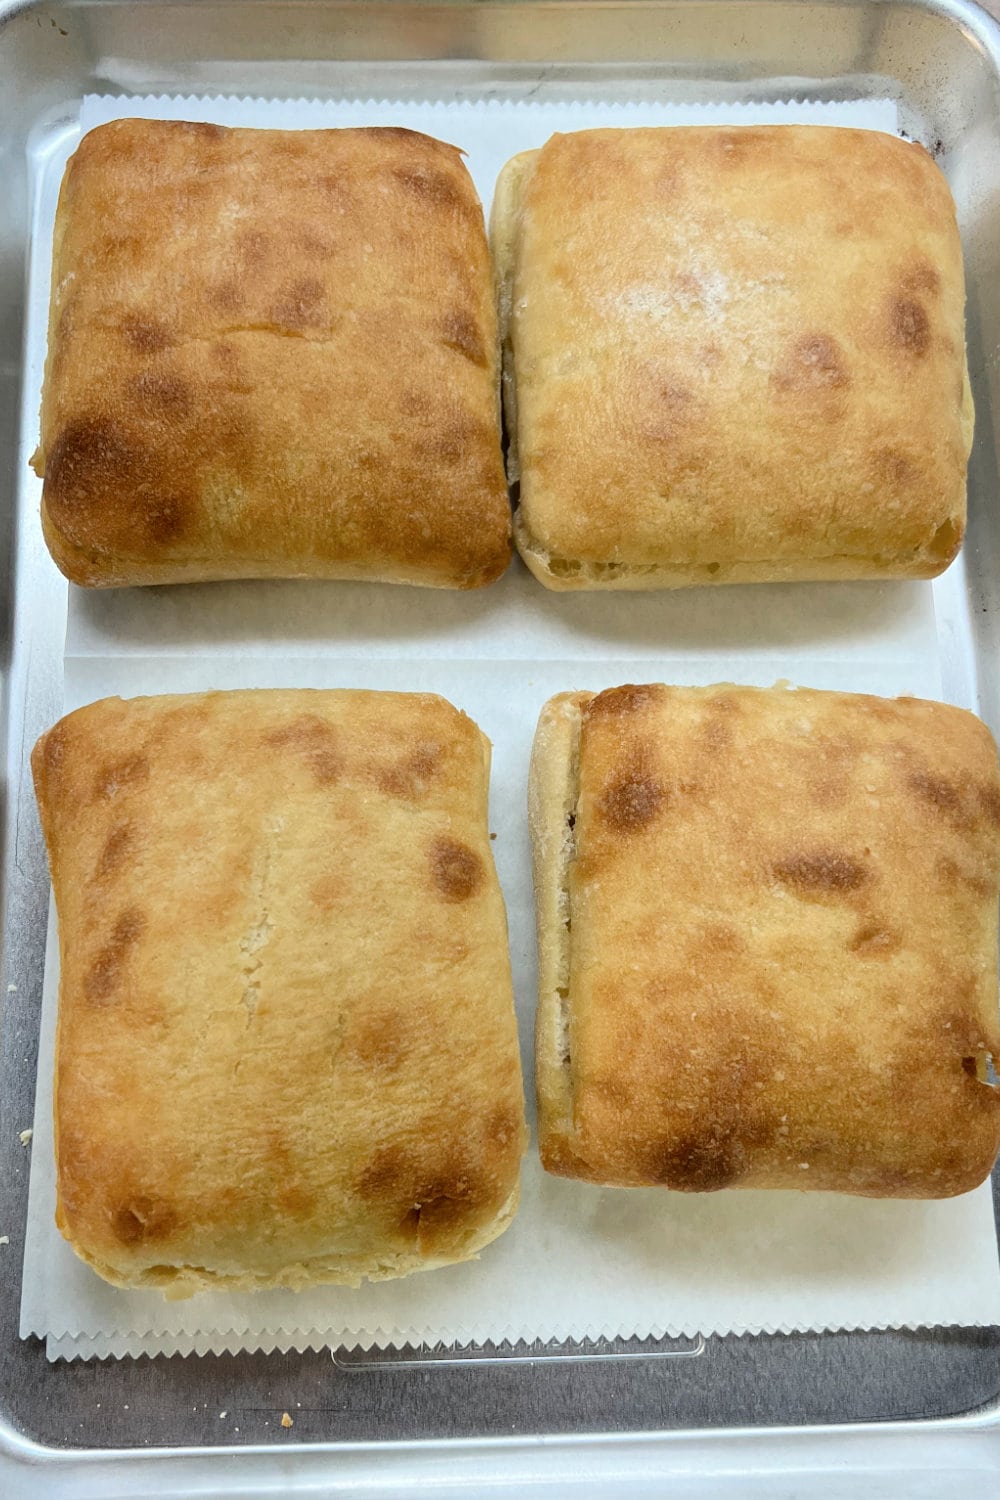 Baked ciabatta rolls, ready for sandwich making. 